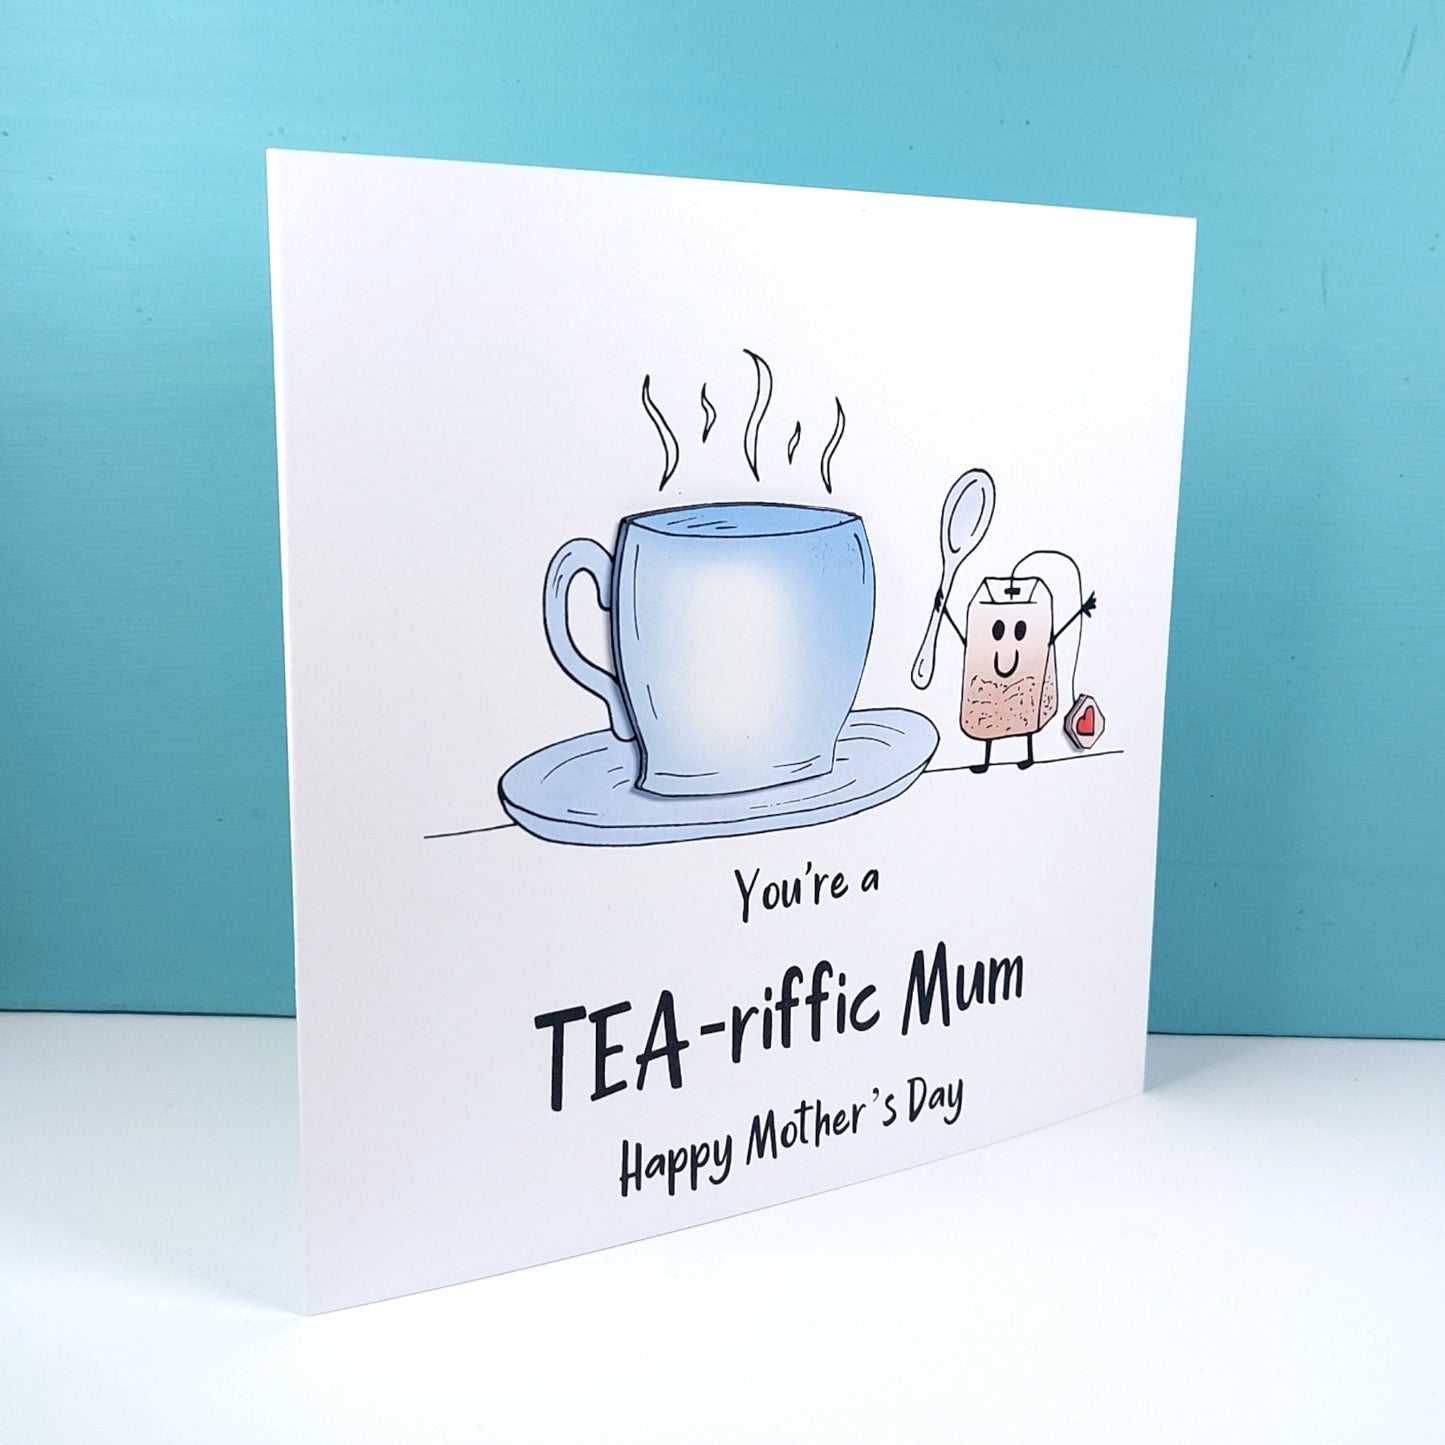 Tea-riffic Mum Mothers day card